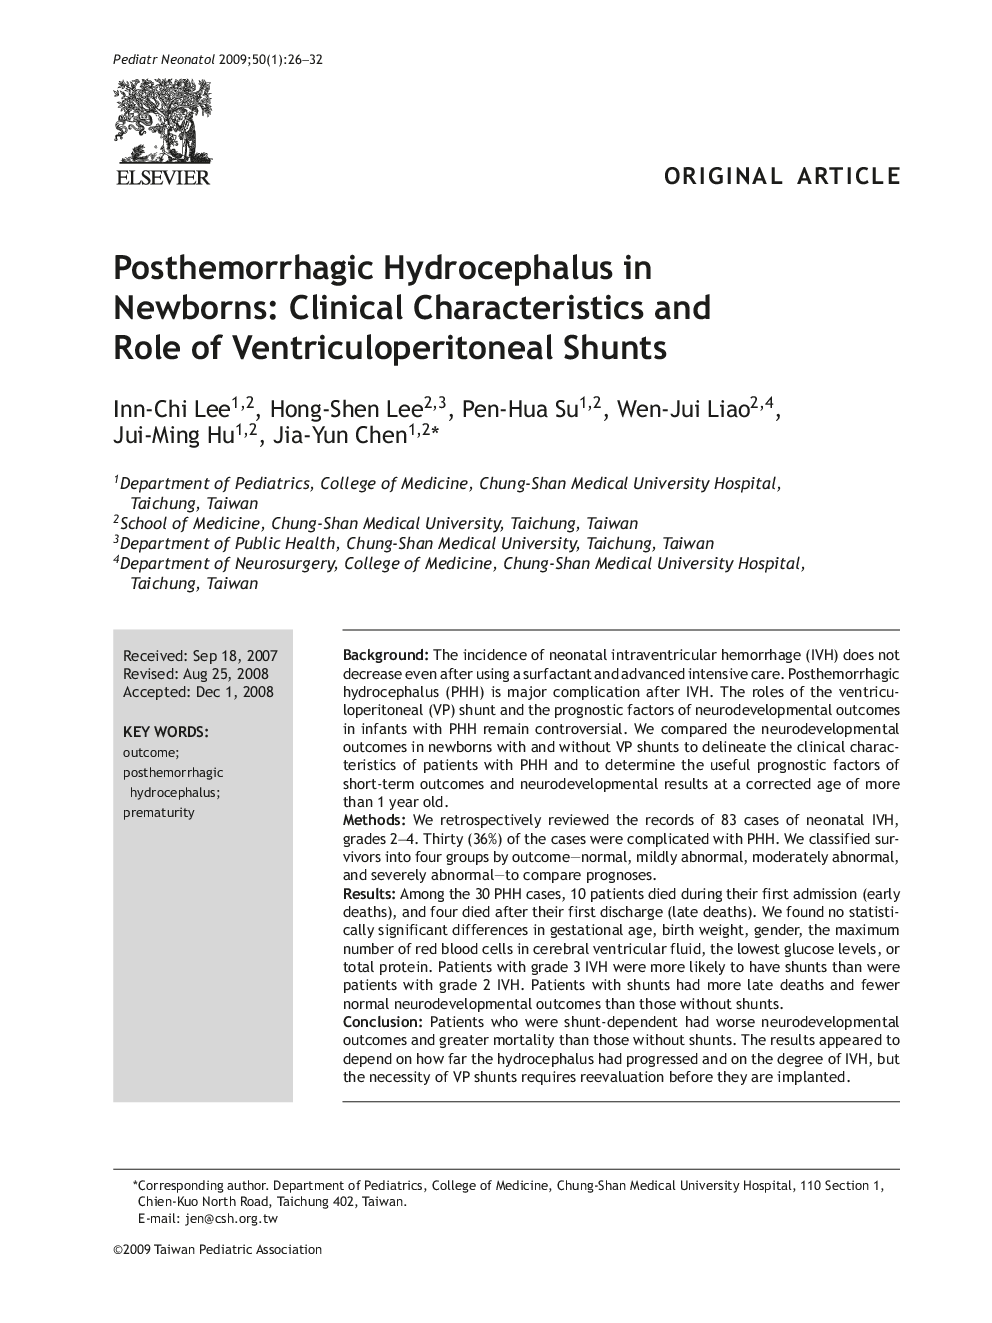 Posthemorrhagic Hydrocephalus in Newborns: Clinical Characteristics and Role of Ventriculoperitoneal Shunts